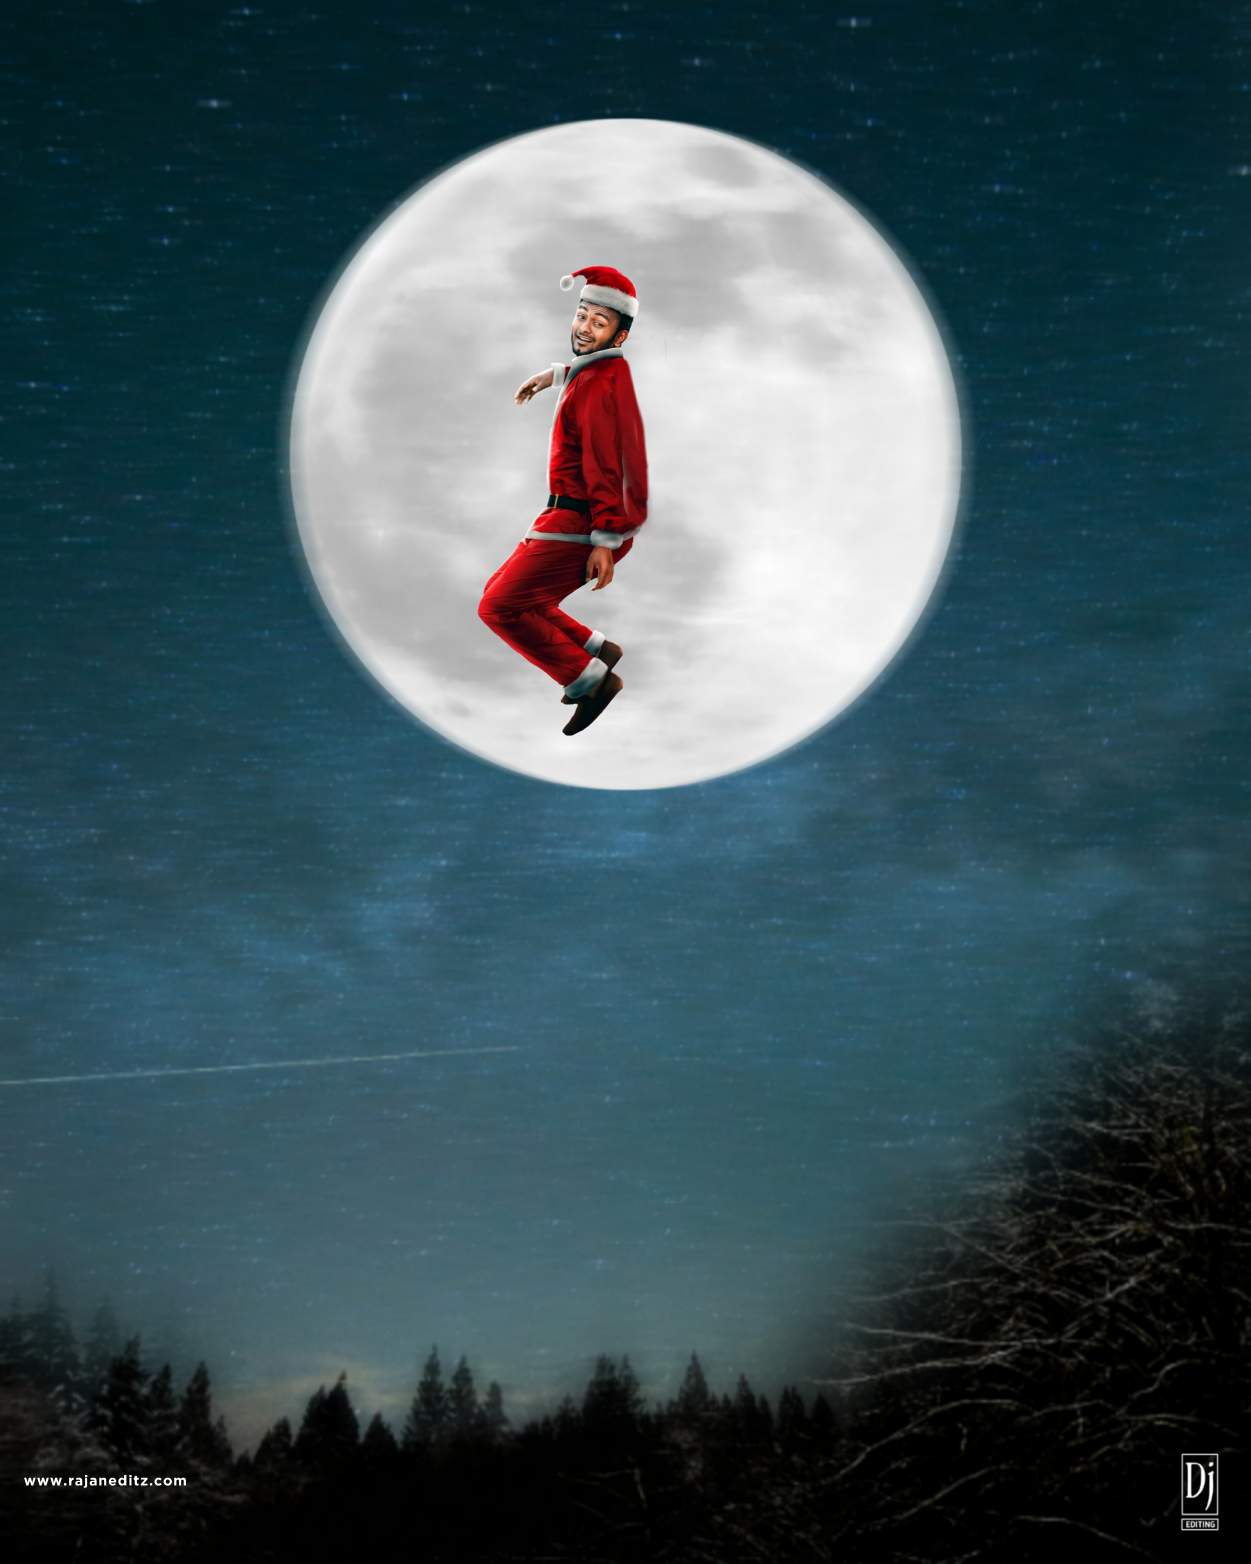 santa on moon backgrounds_Christmas backgrounds_Christmas editing background_Rajan editz